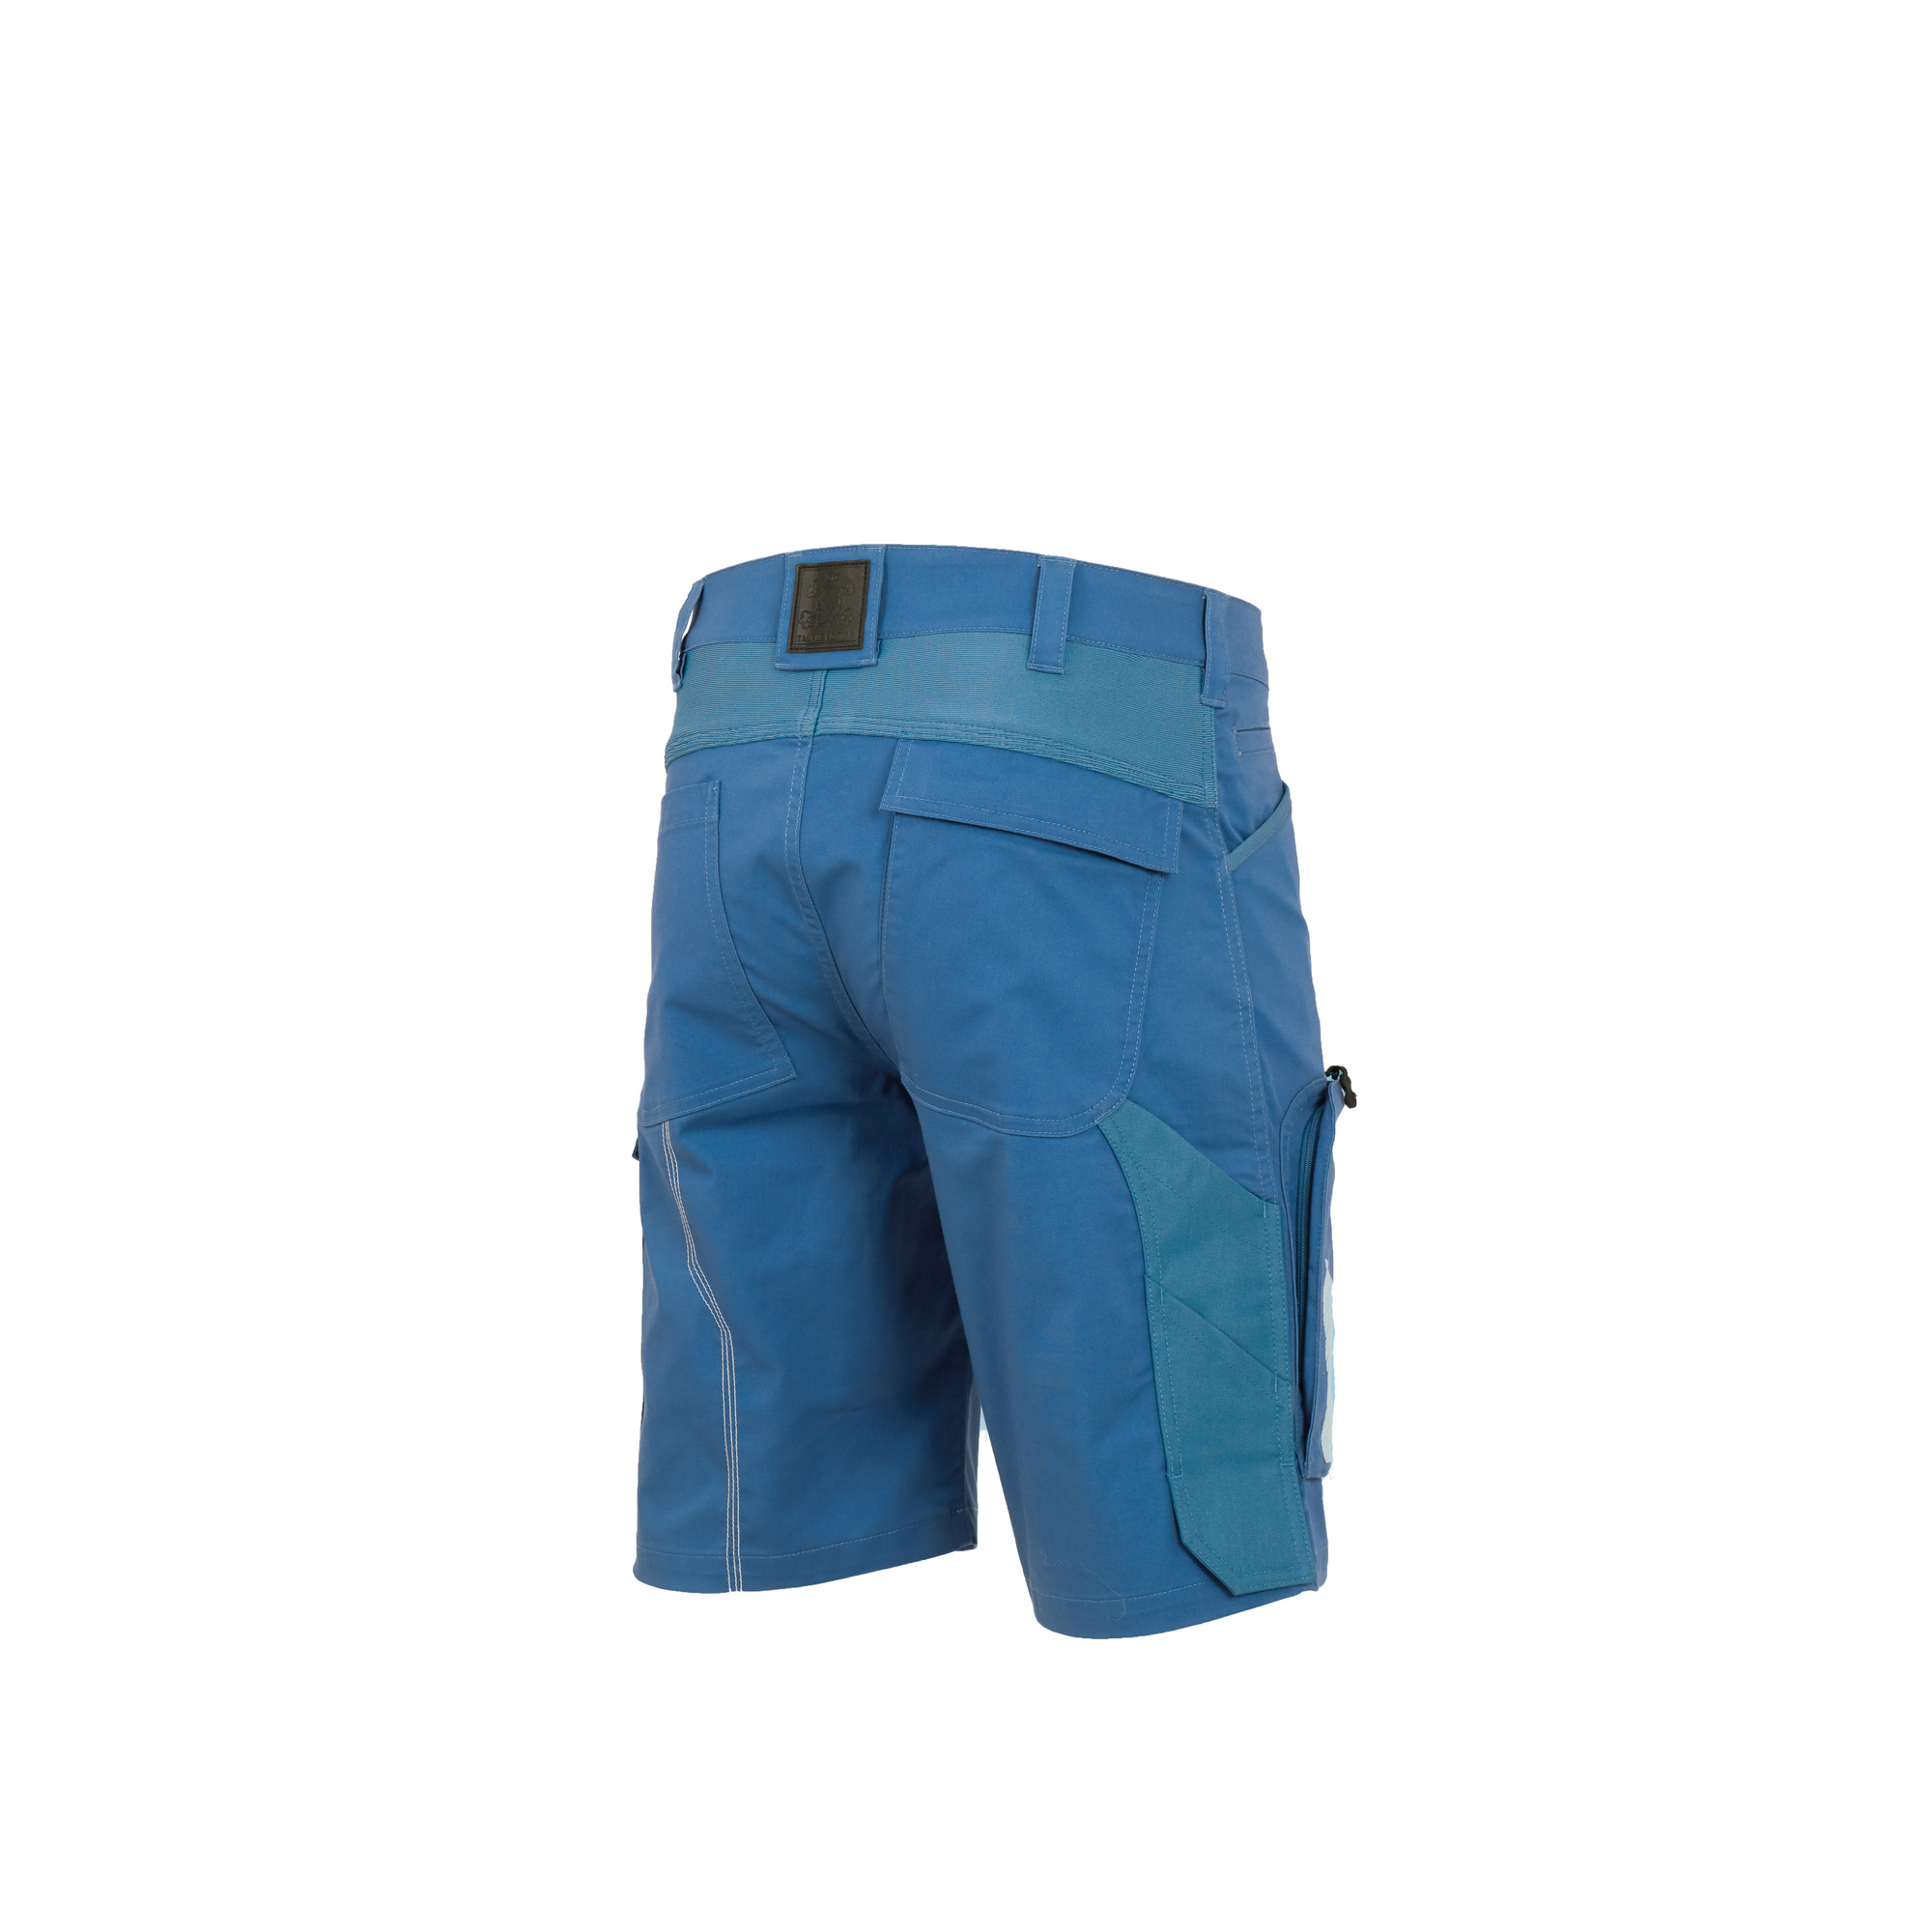 Shorts 'Taurus' blau 54 + product picture